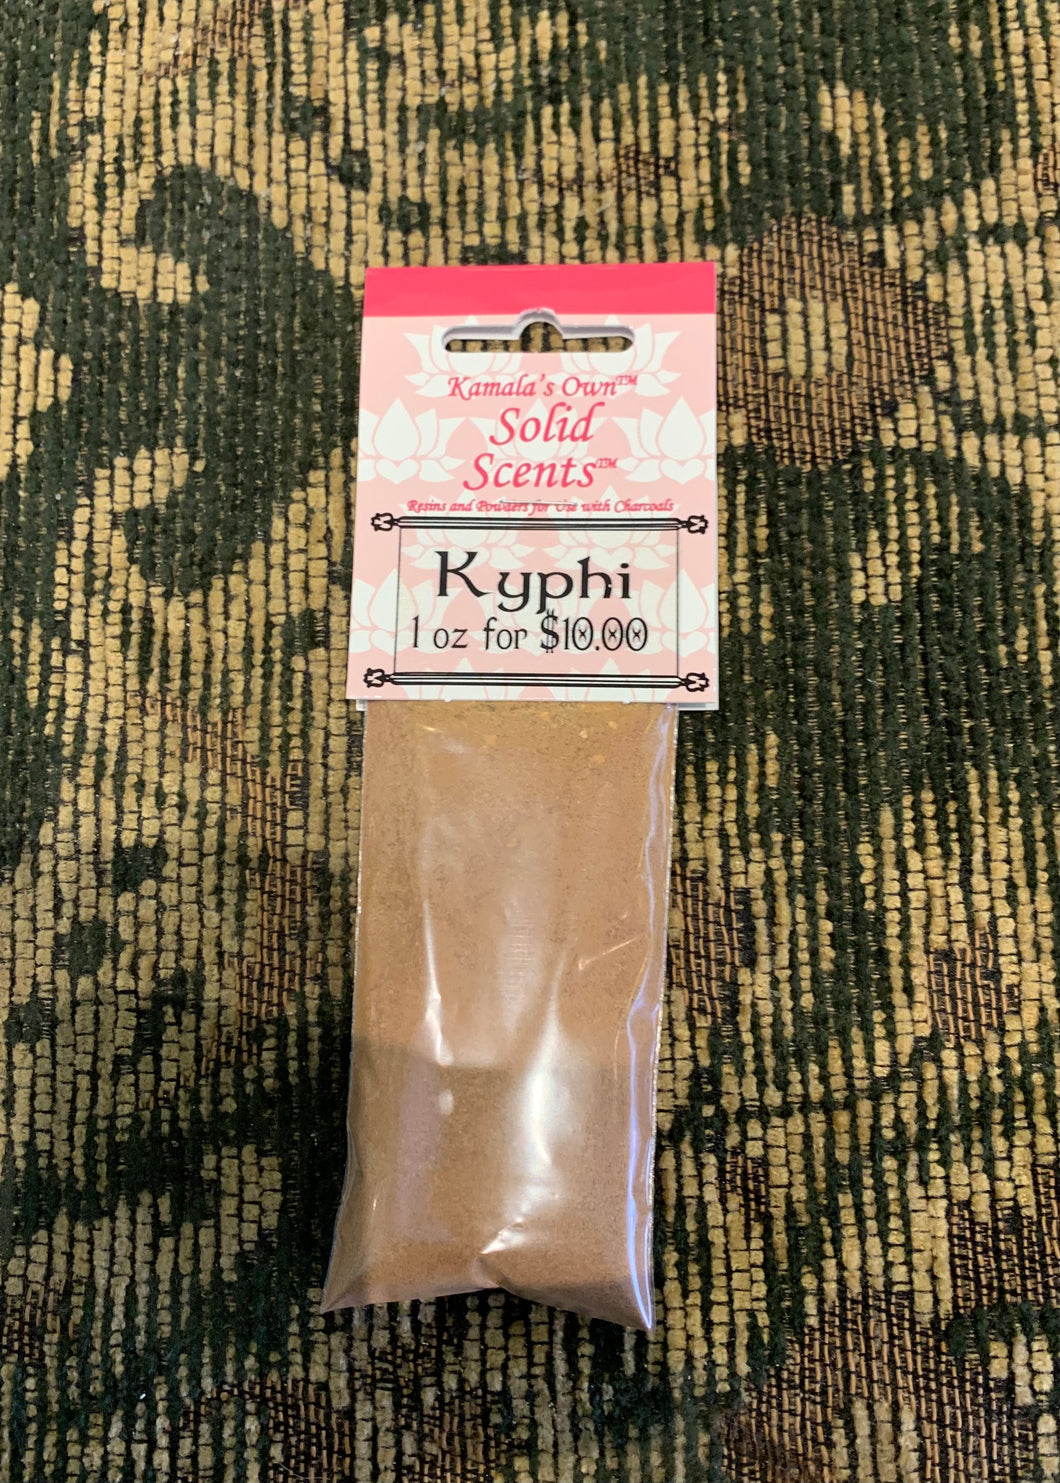 Kyphi powdered incense